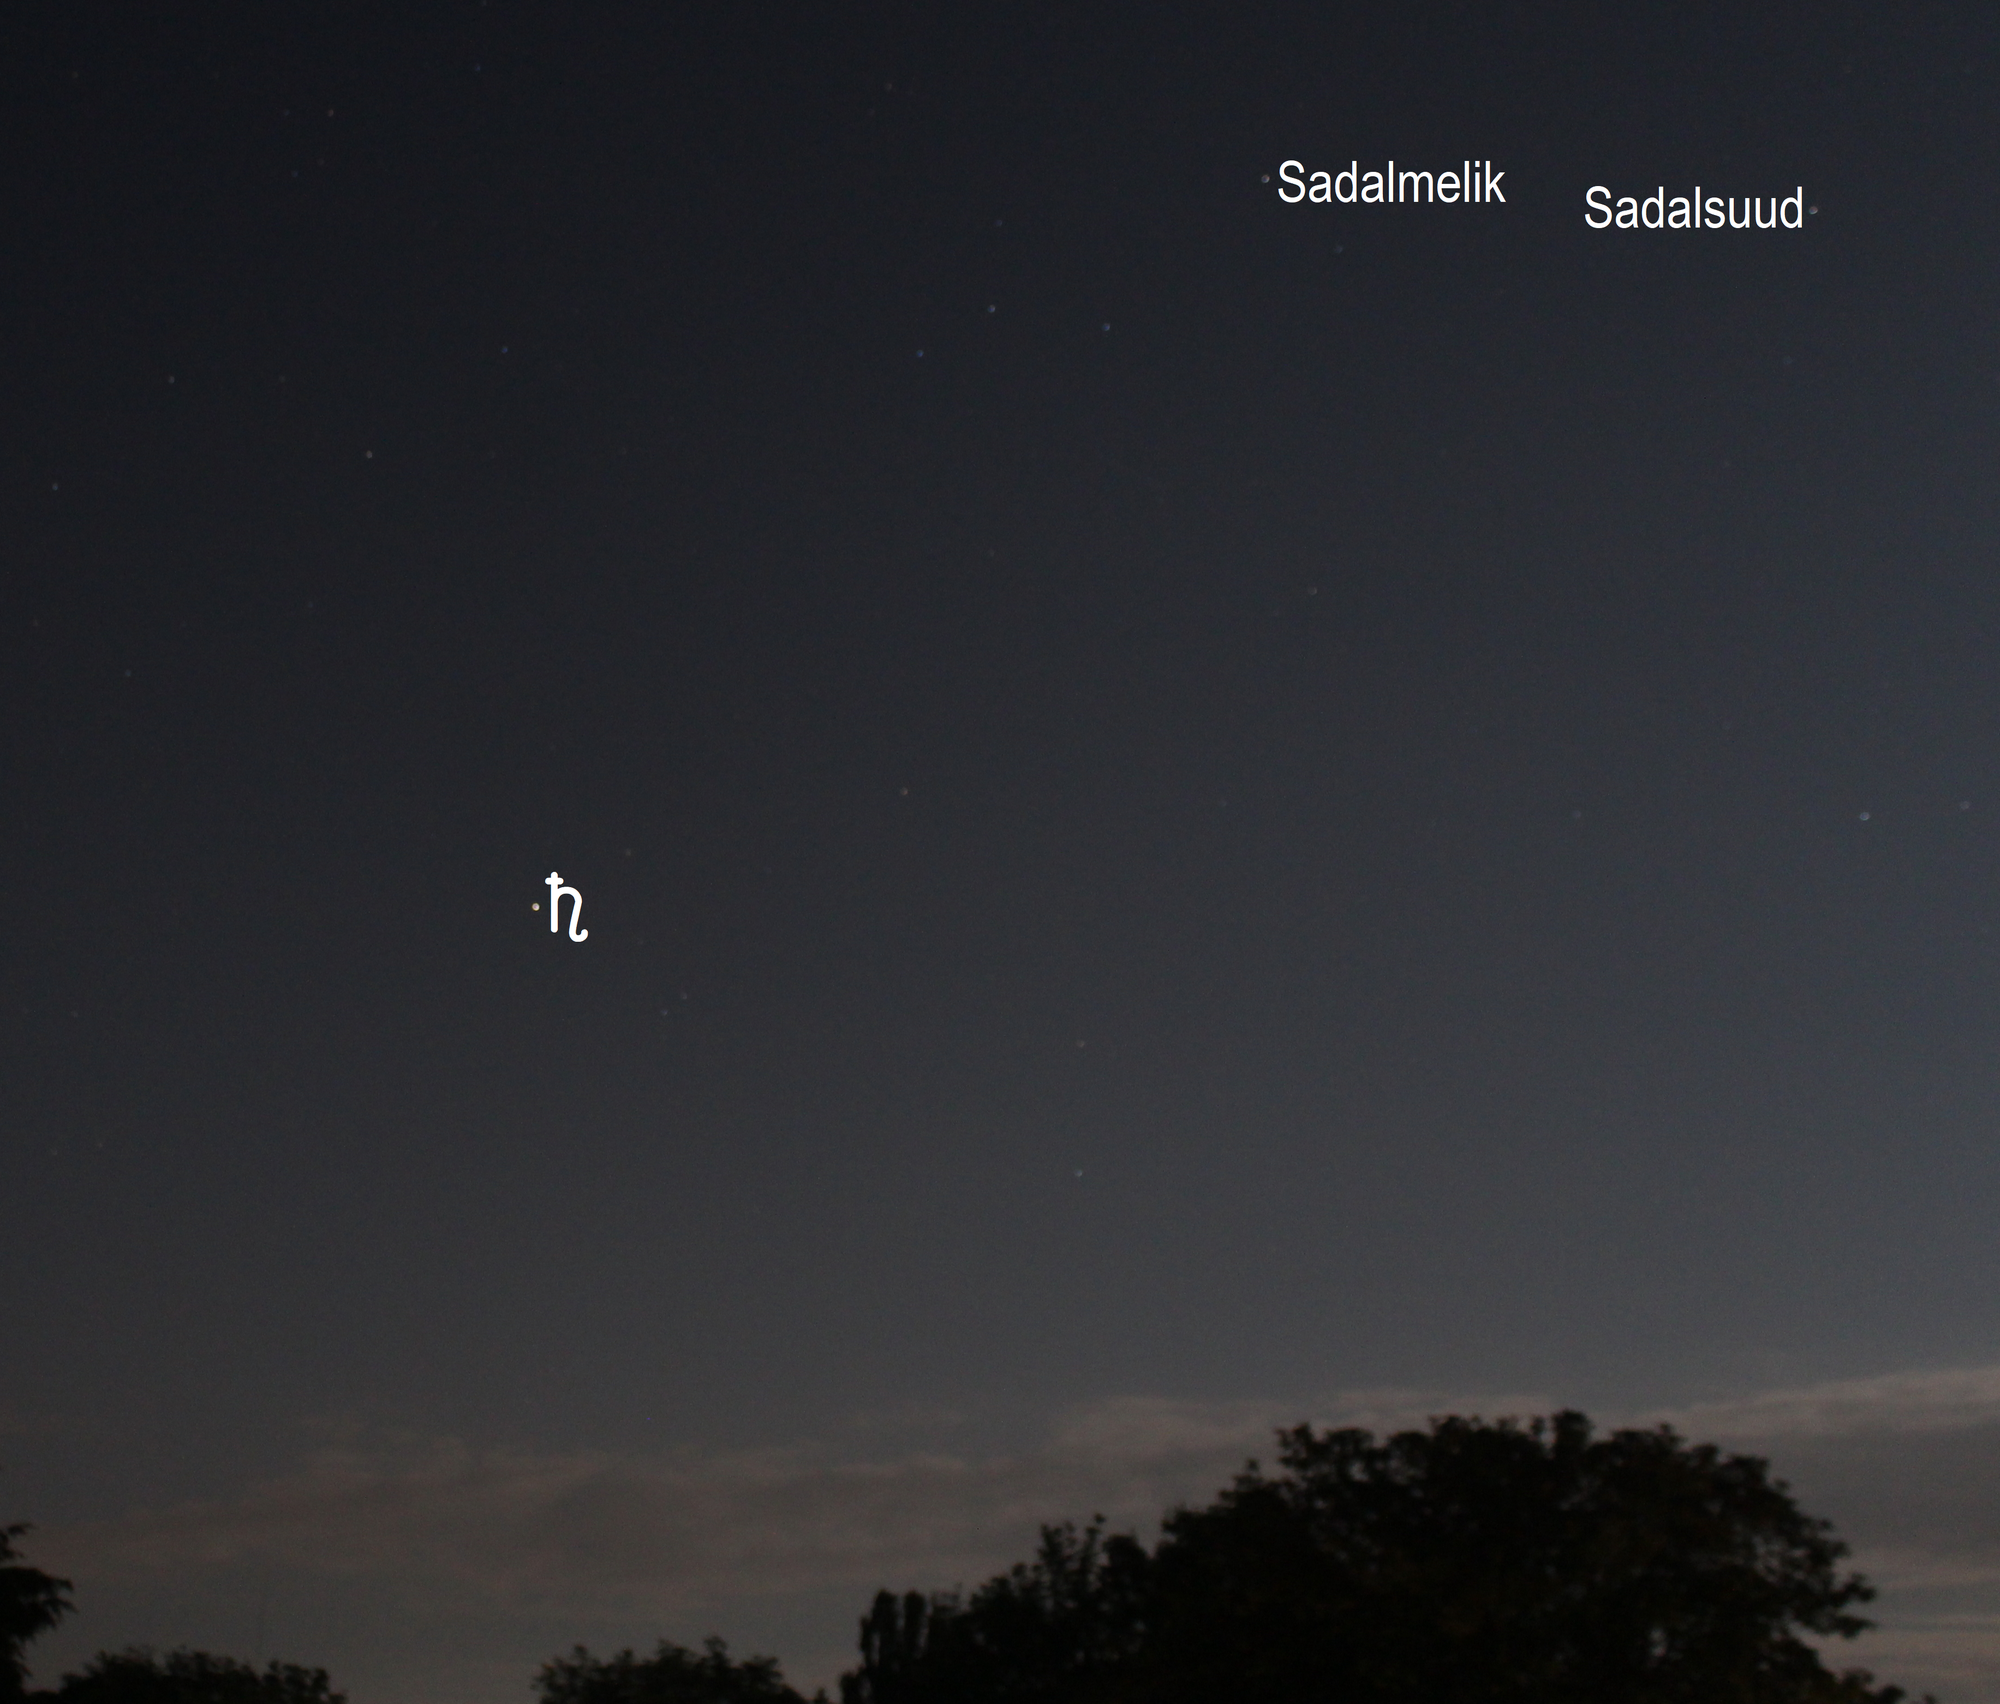 Saturn am Morgenhimmel (Objekte beschriftet)